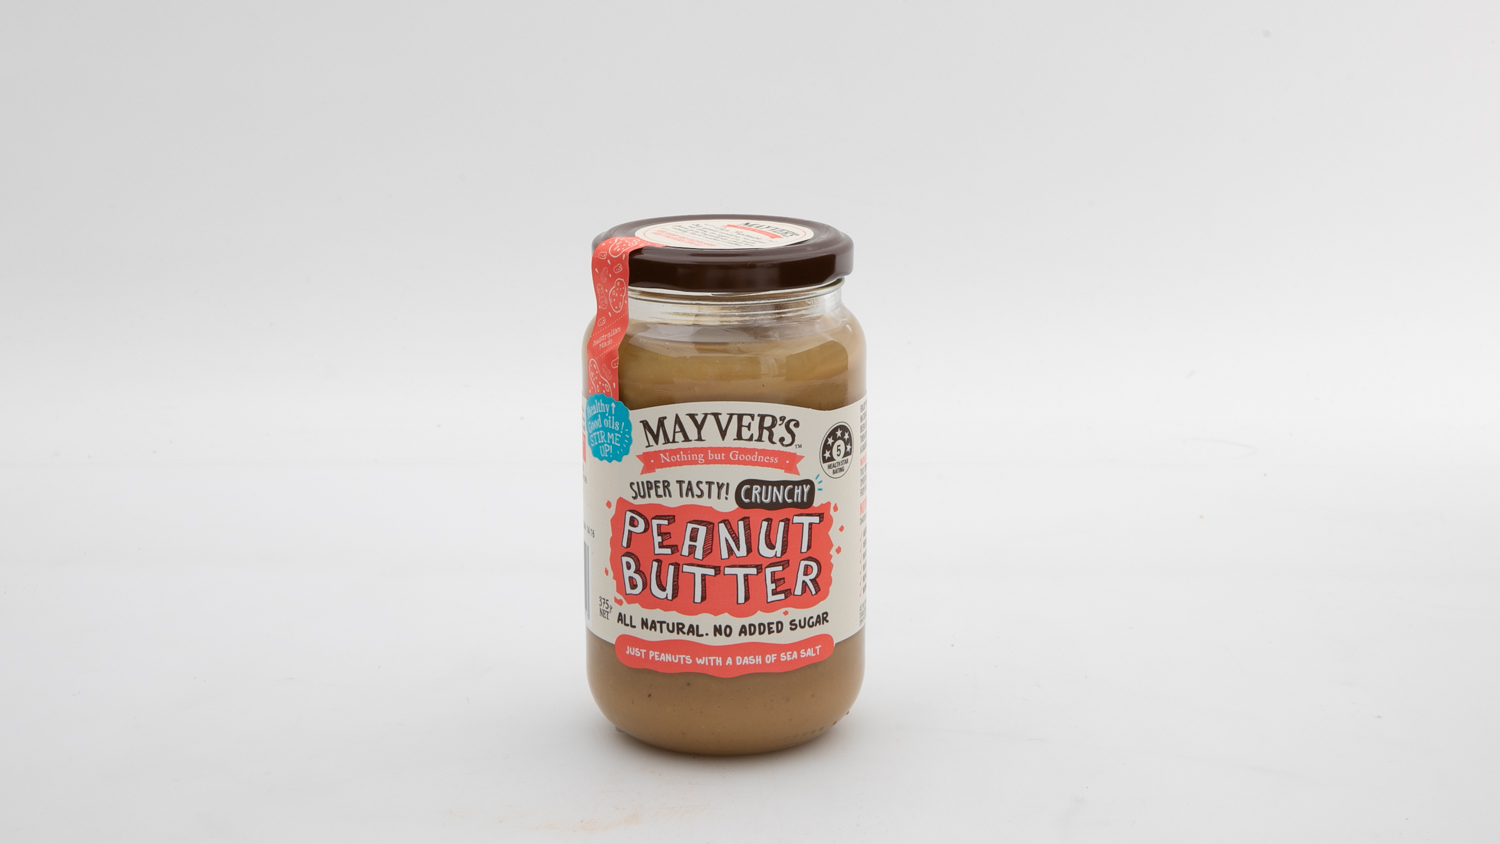 Mayver's Peanut Butter Crunchy carousel image